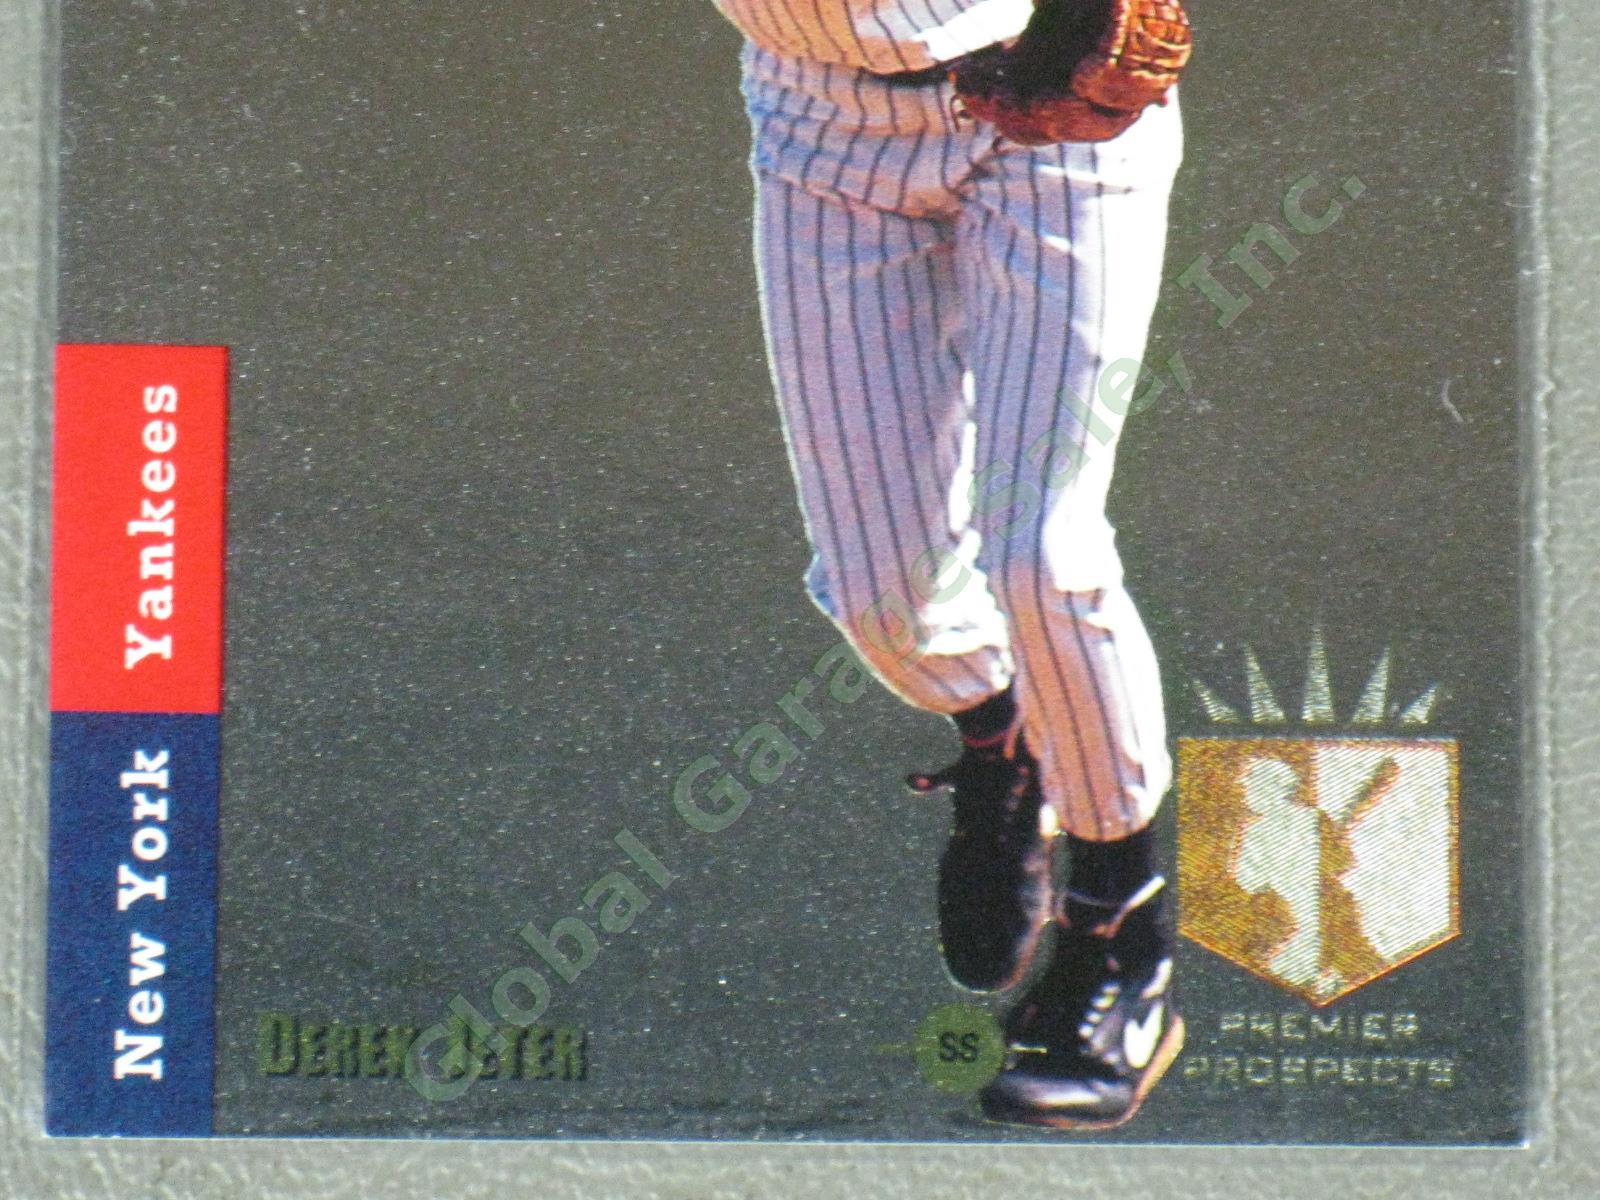 1993 Upper Deck SP Derek Jeter NY Yankees #279 Rookie Card Sealed Until 1/8/17! 2